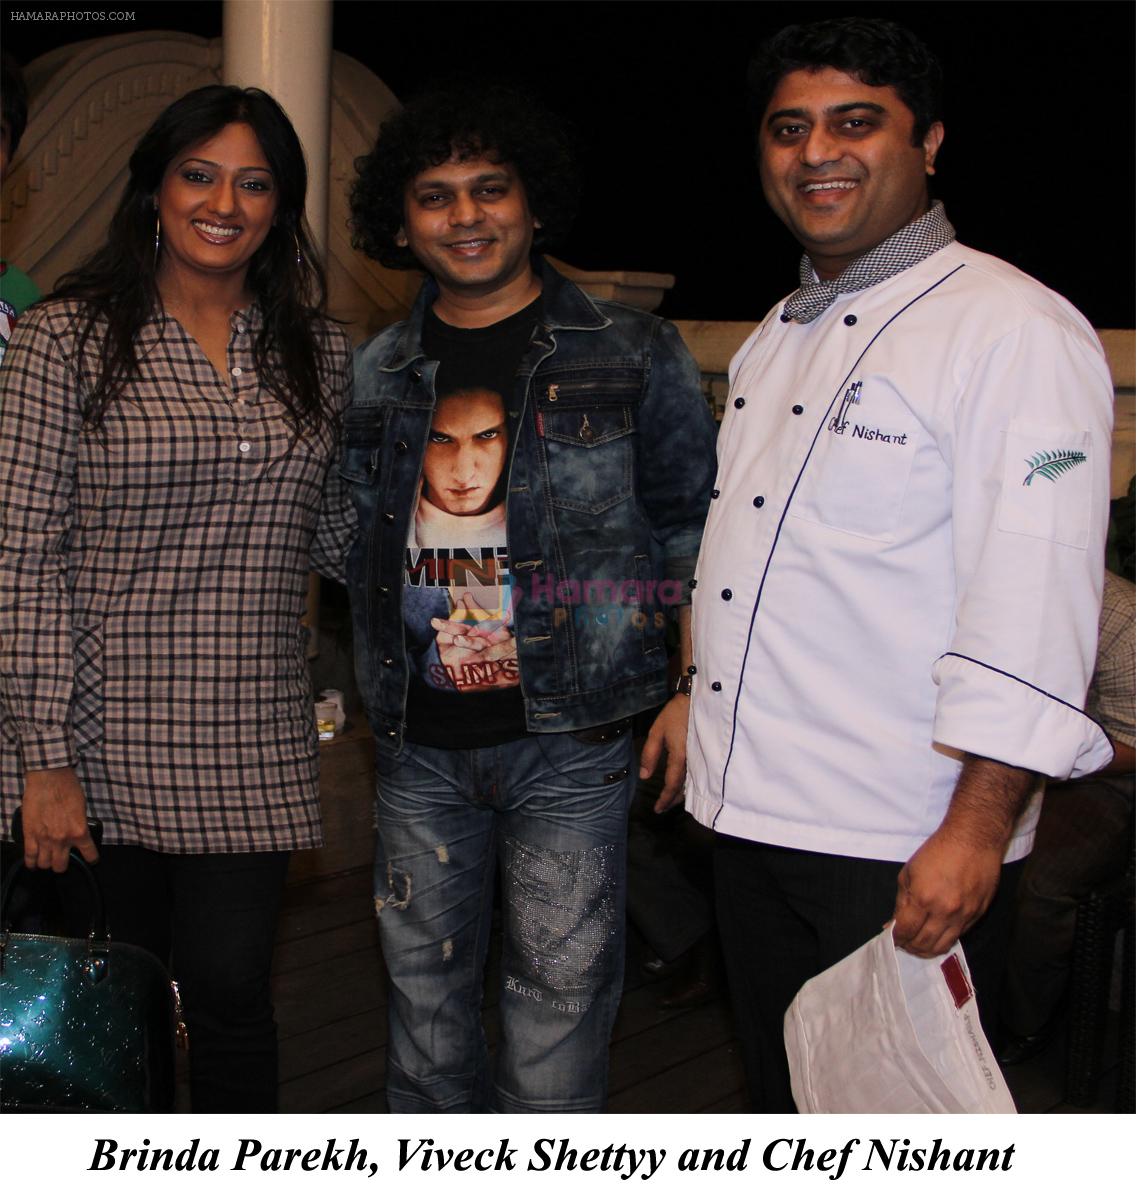 Brinda Parekh, Viveck Shettyy and Chef Nishant at Cake Mixing Celebrations at Hotel Meluha the fern